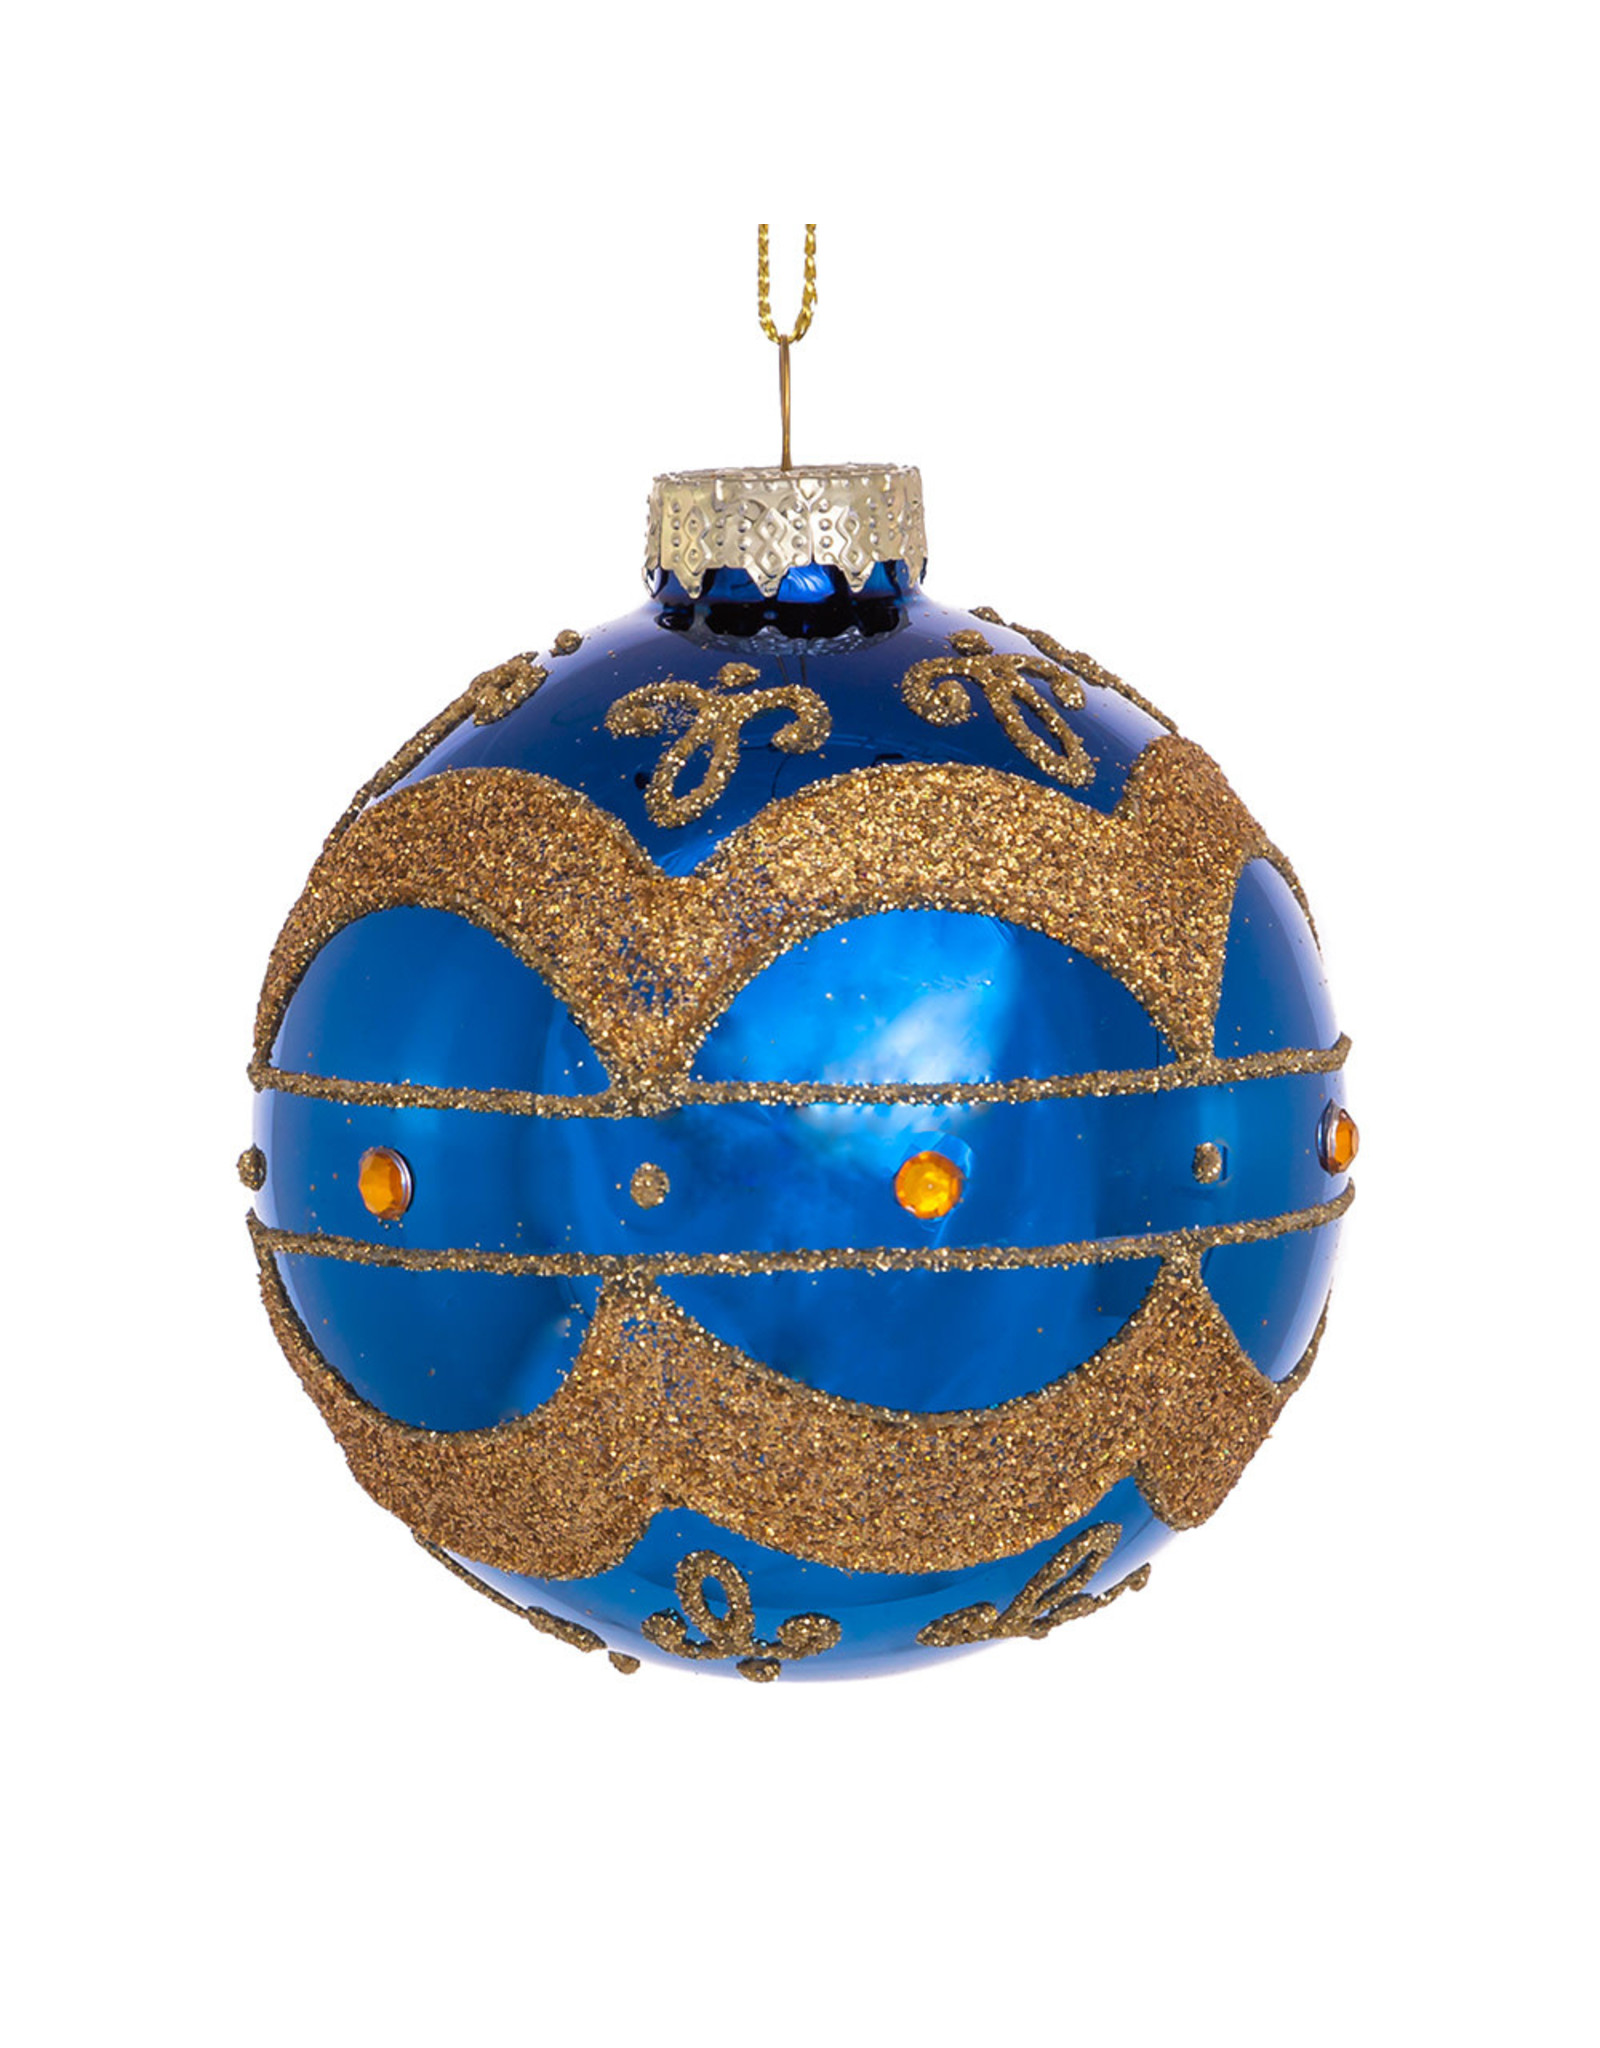 Kurt Adler Navy Blue W Gold Embellishments Glass Ball Ornaments Set 6